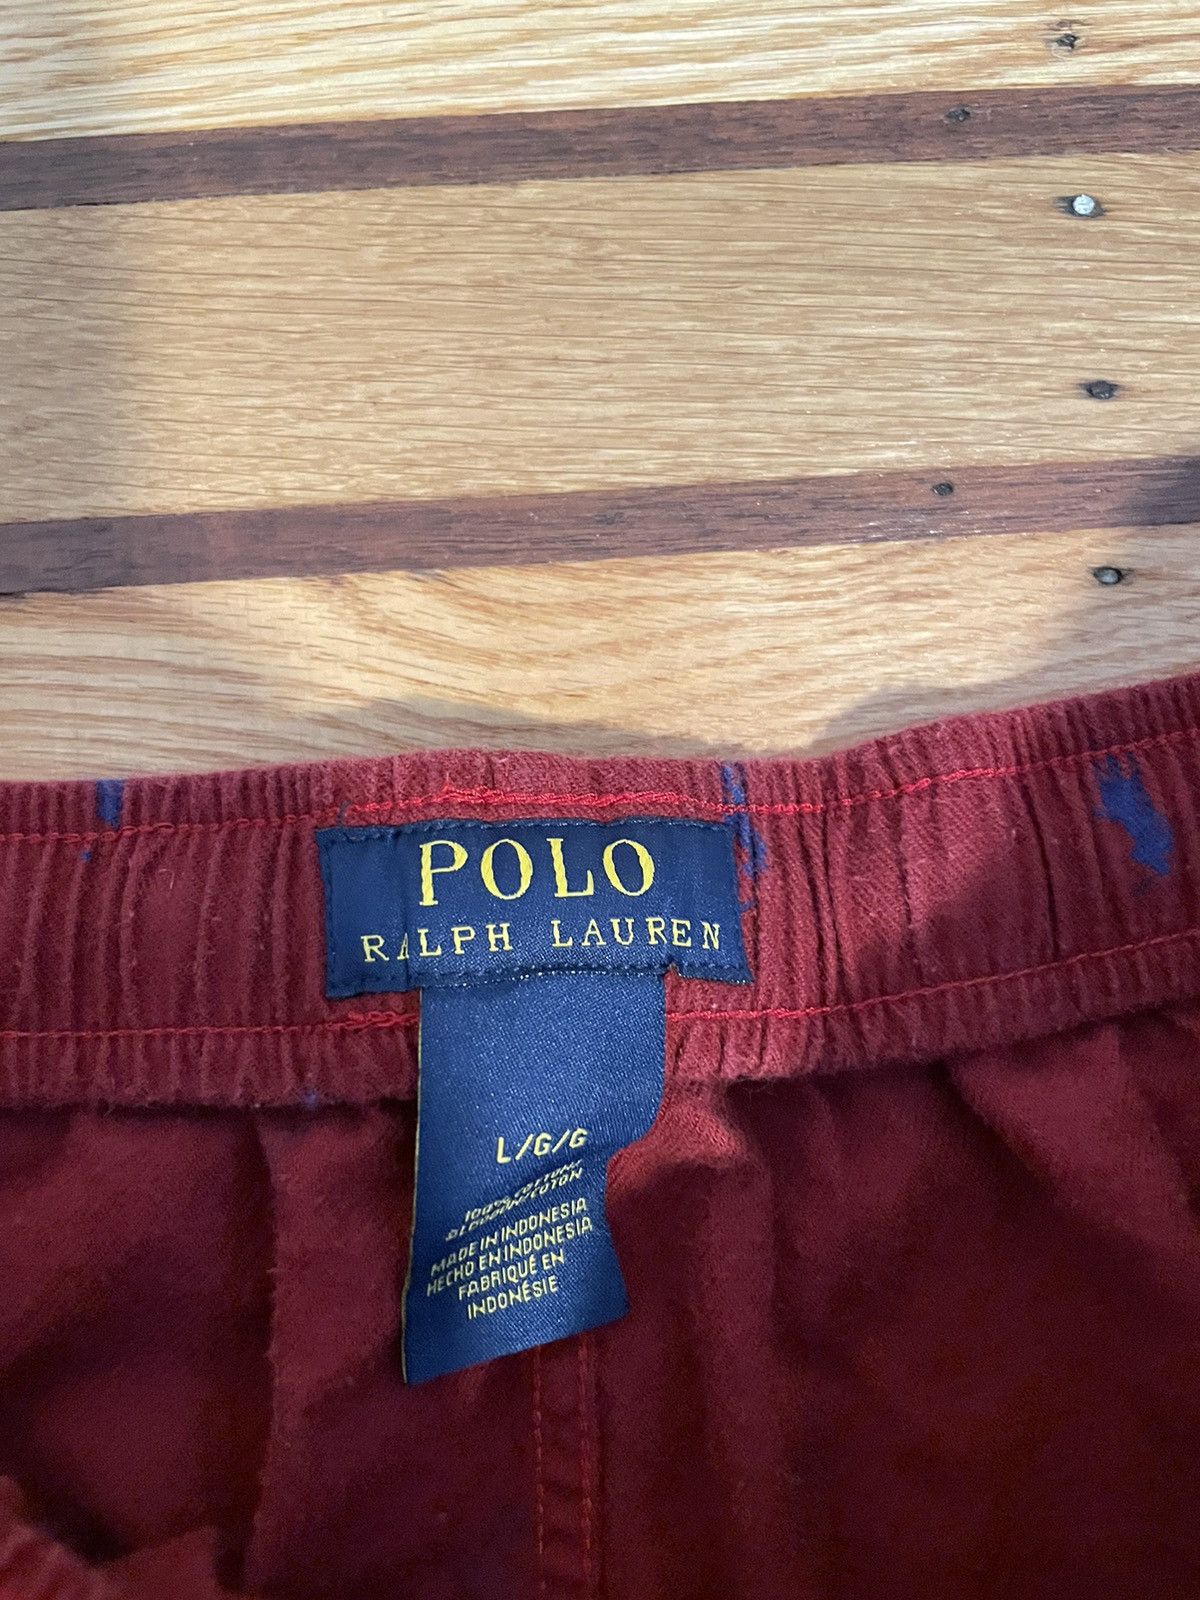 Ralph Lauren Vintage Polo Ralph Lauren Sleepwear Monogram Pants Trousers Size US 31 - 7 Preview